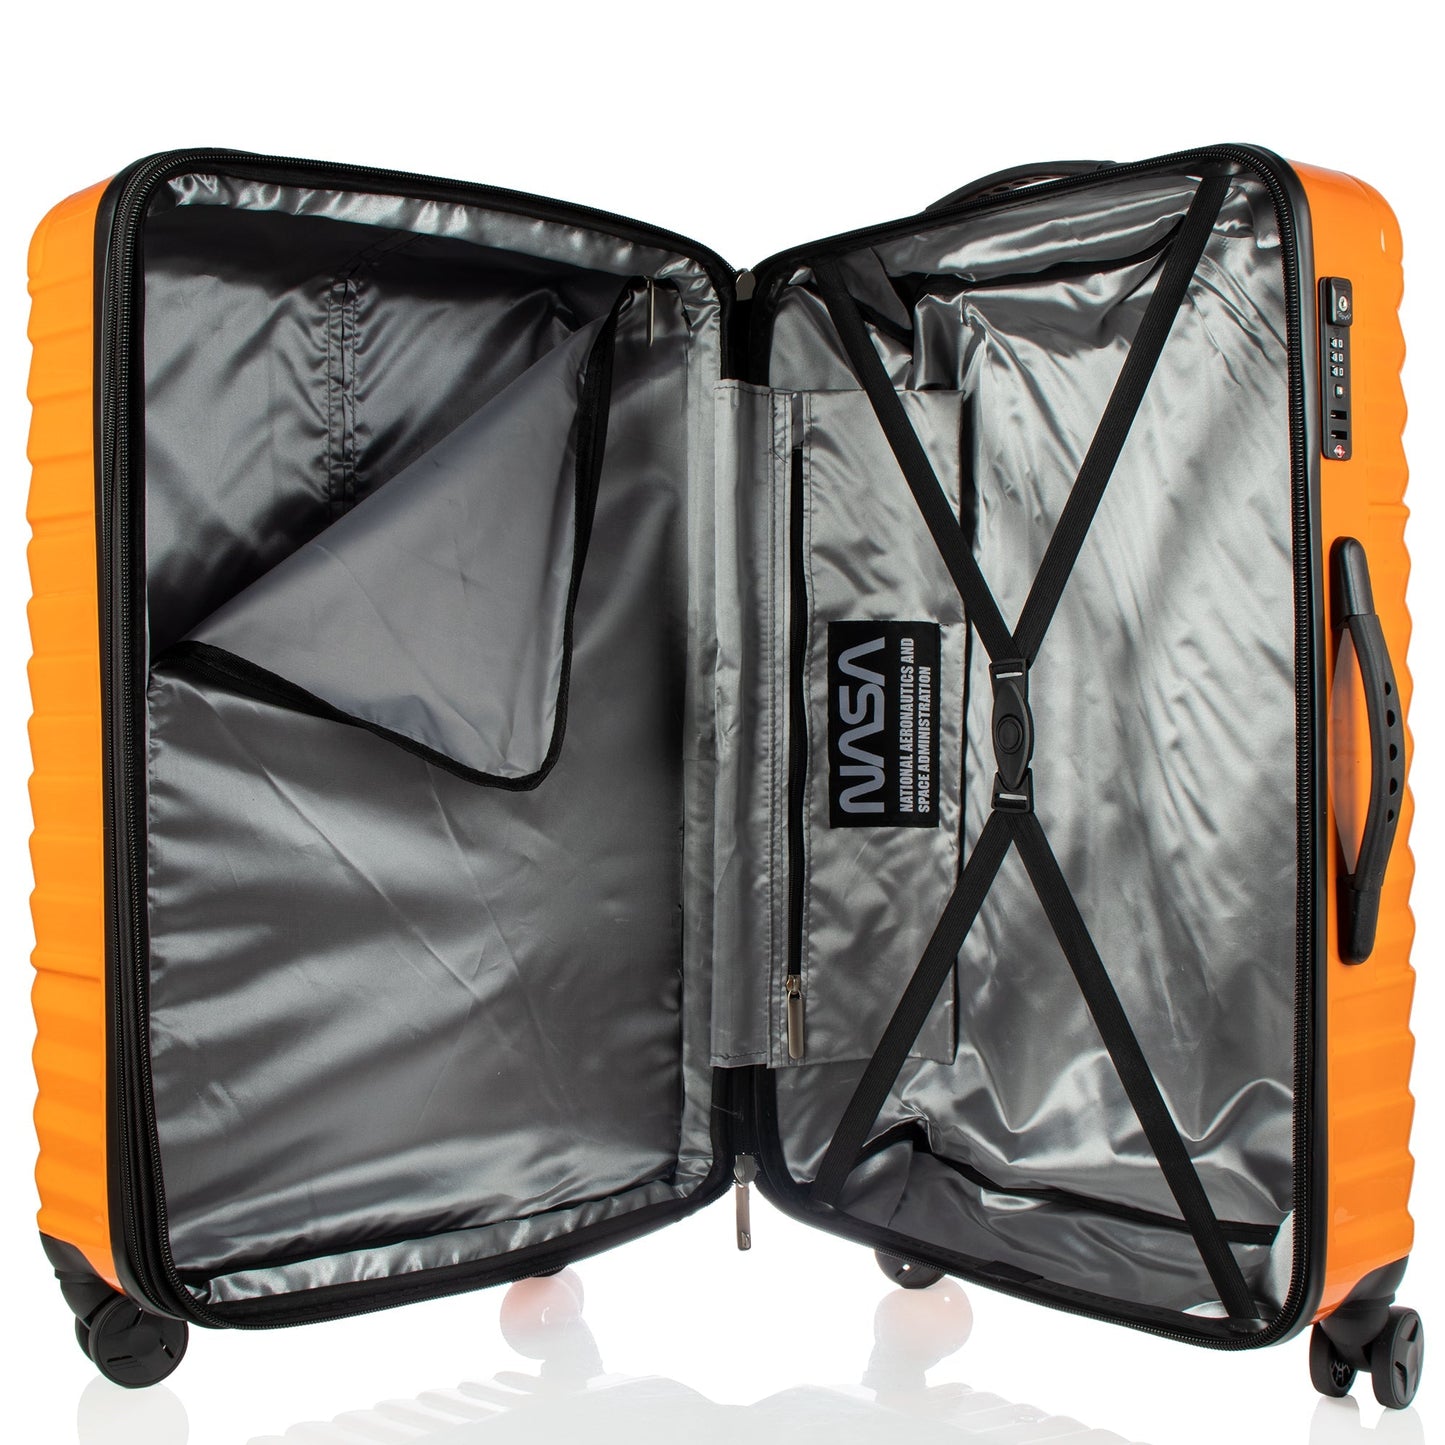 Space Shuttle Collection Orange Luggage 3 Piece Set (21/25/29") Suitcase Lock Spinner Hardshell